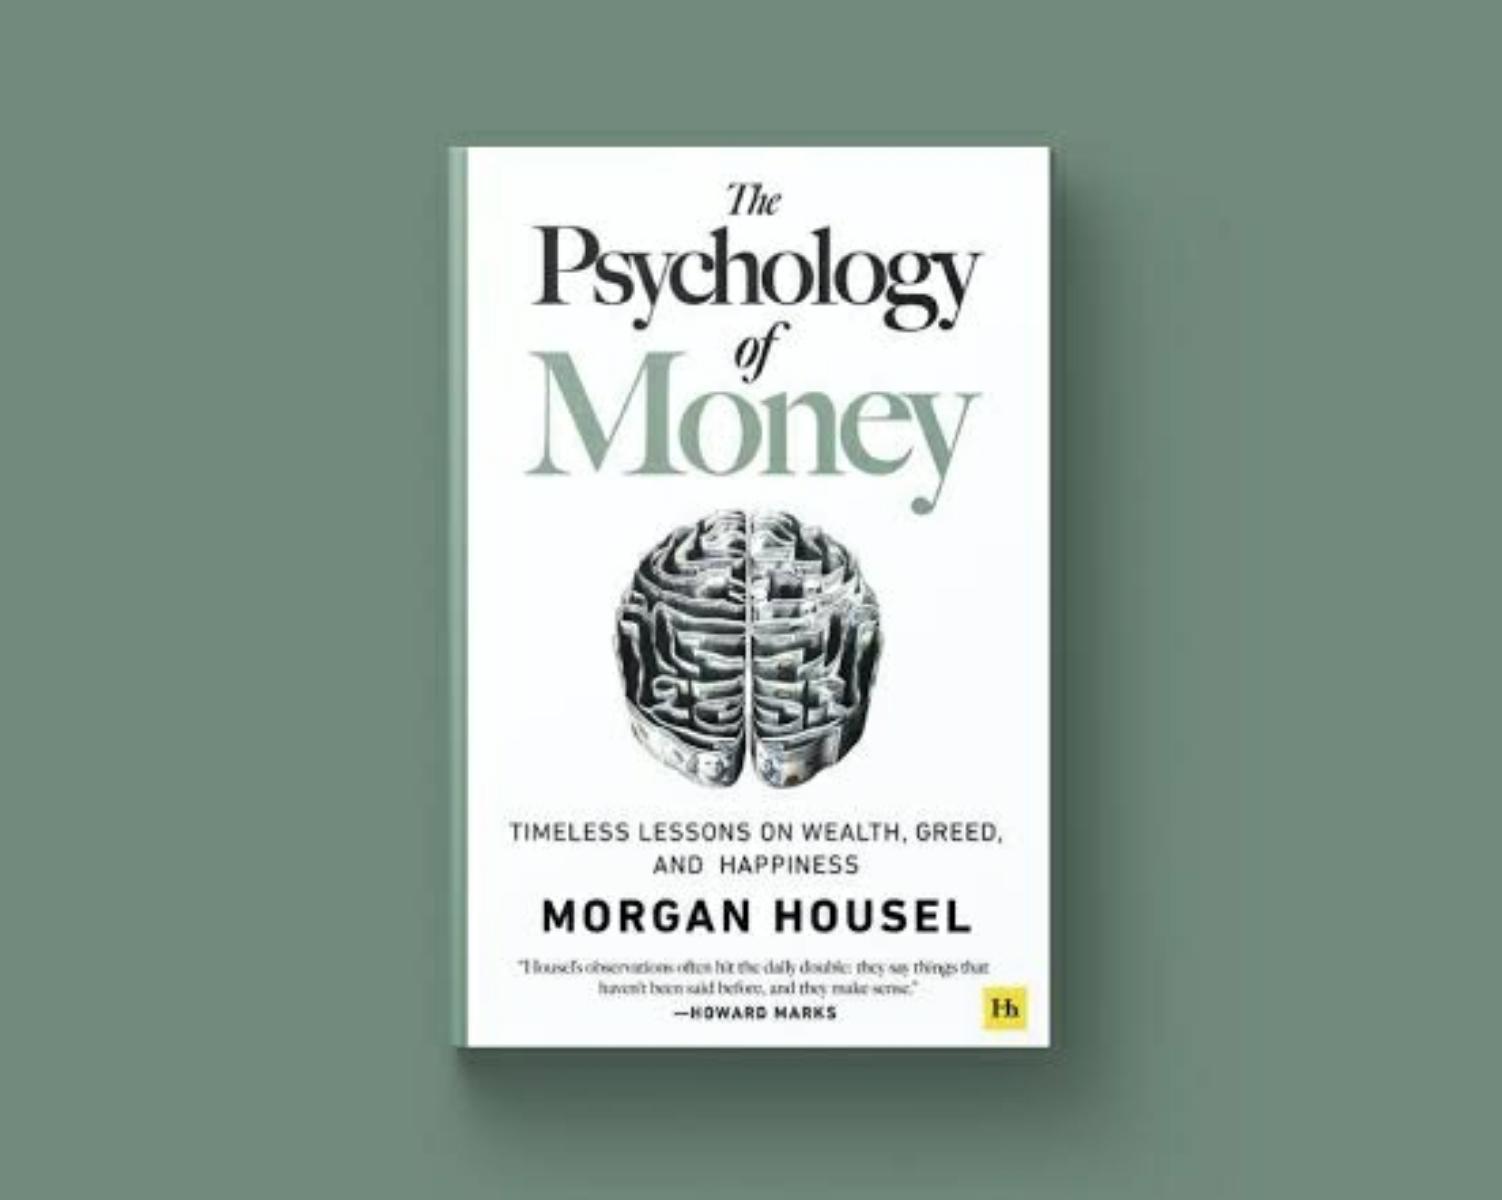 MORGAN HOUSEL, THE PSYCHOLOGY OF MONEY